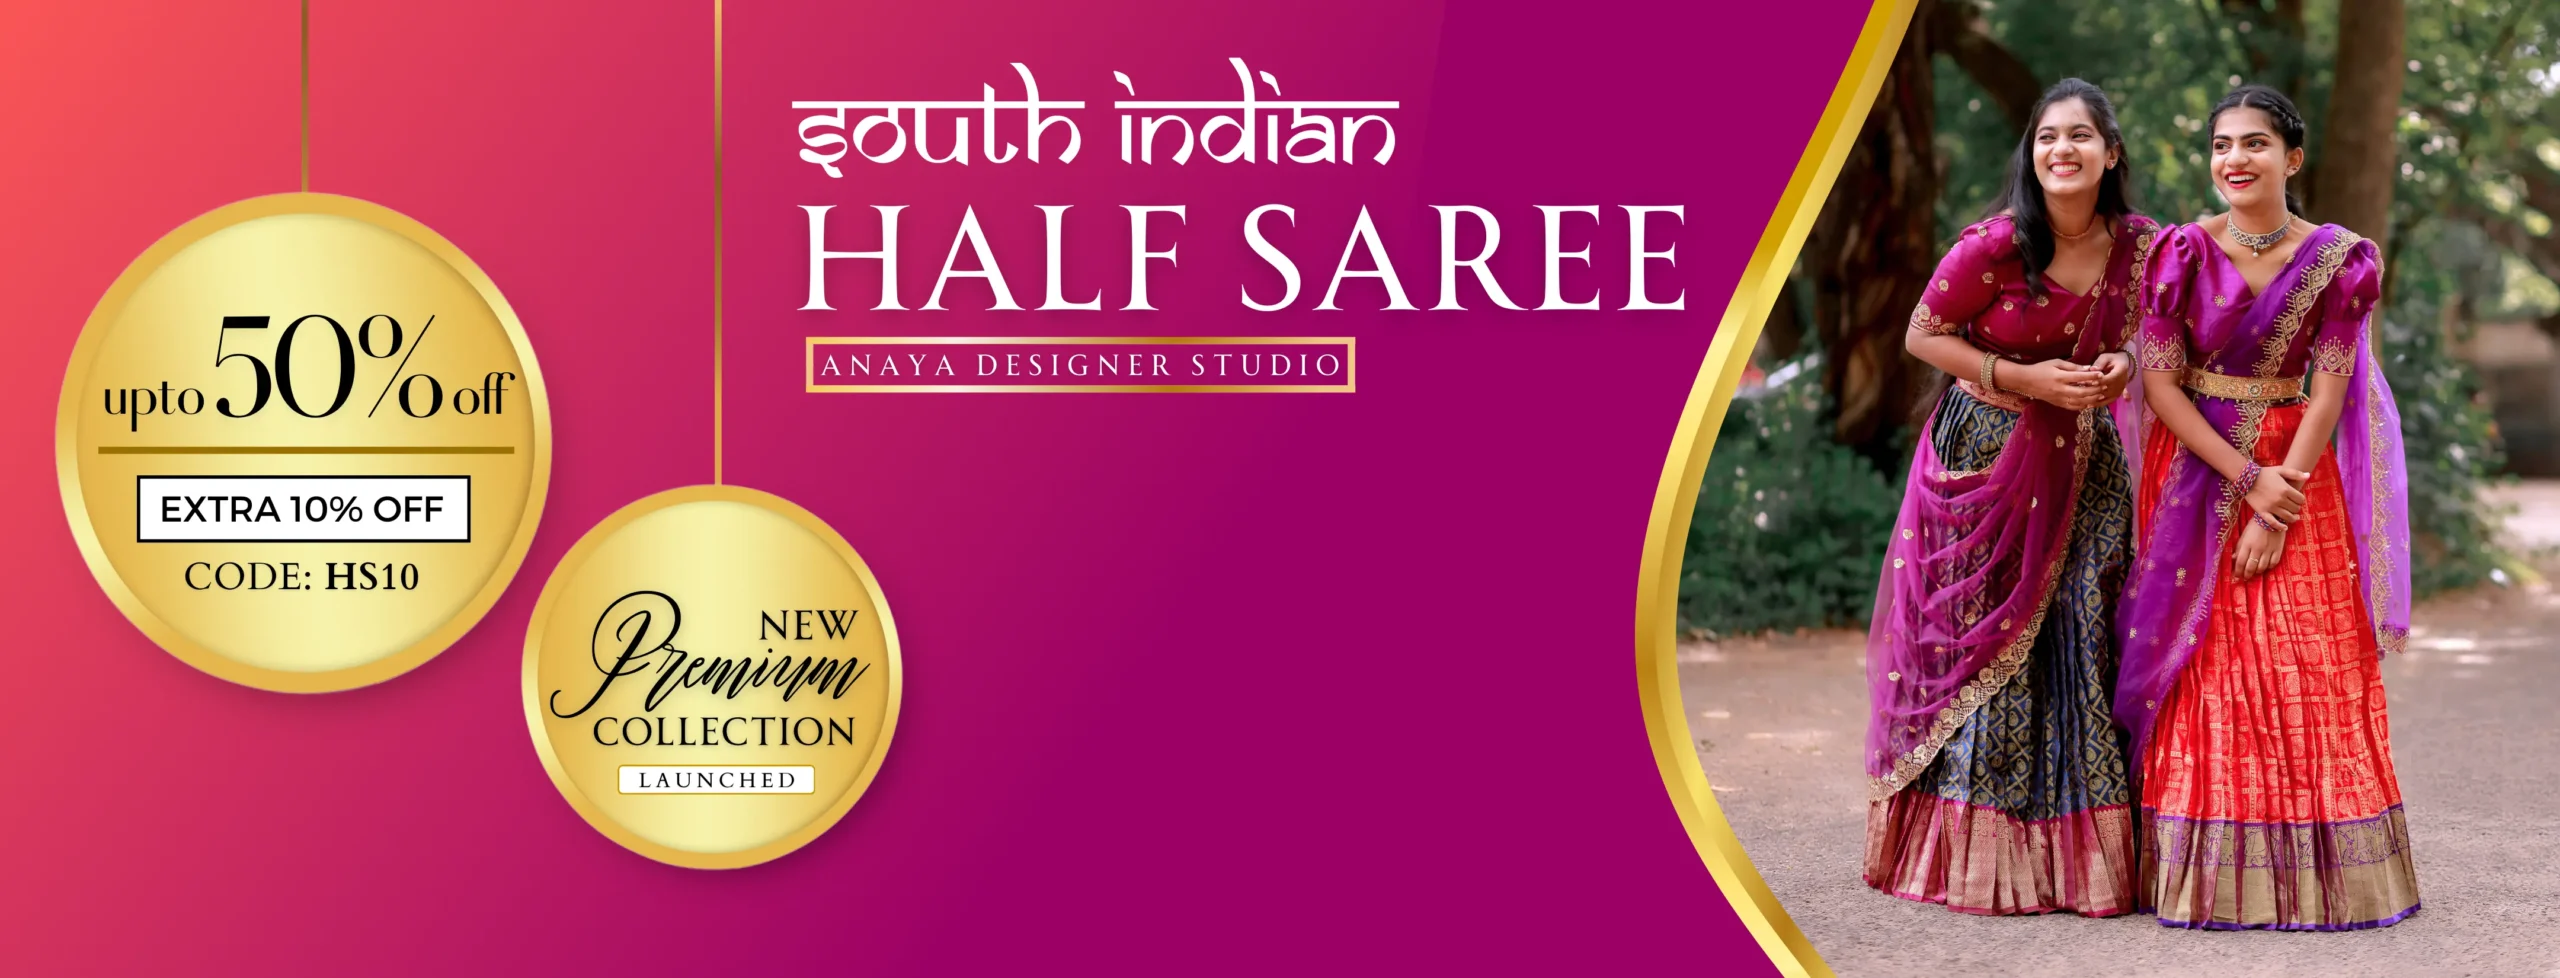 South indian hal saree scaled Anaya Designer Studio | Sarees, Gowns and Lehenga Choli